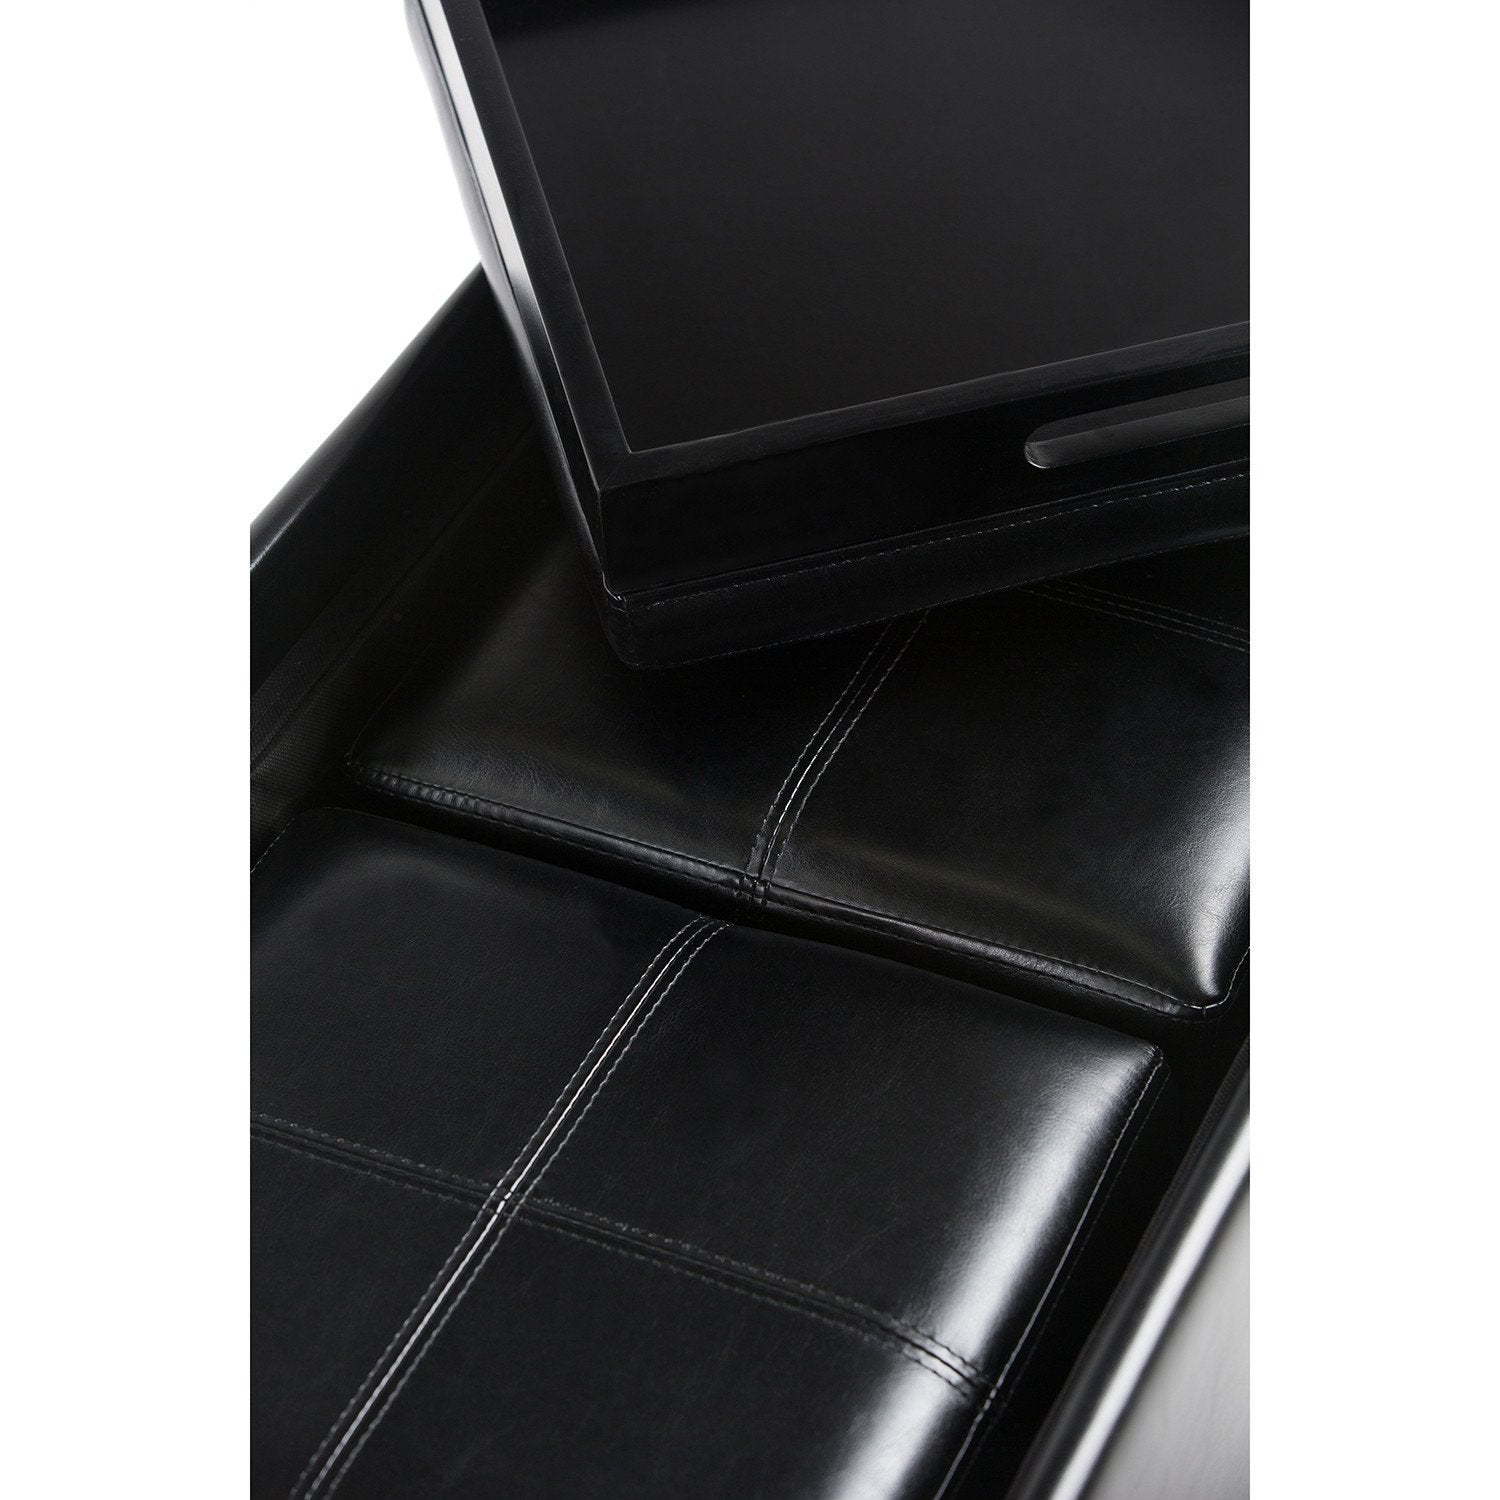 Midnight Black Vegan Leather | Avalon Vegan Leather 5 piece Storage Ottoman